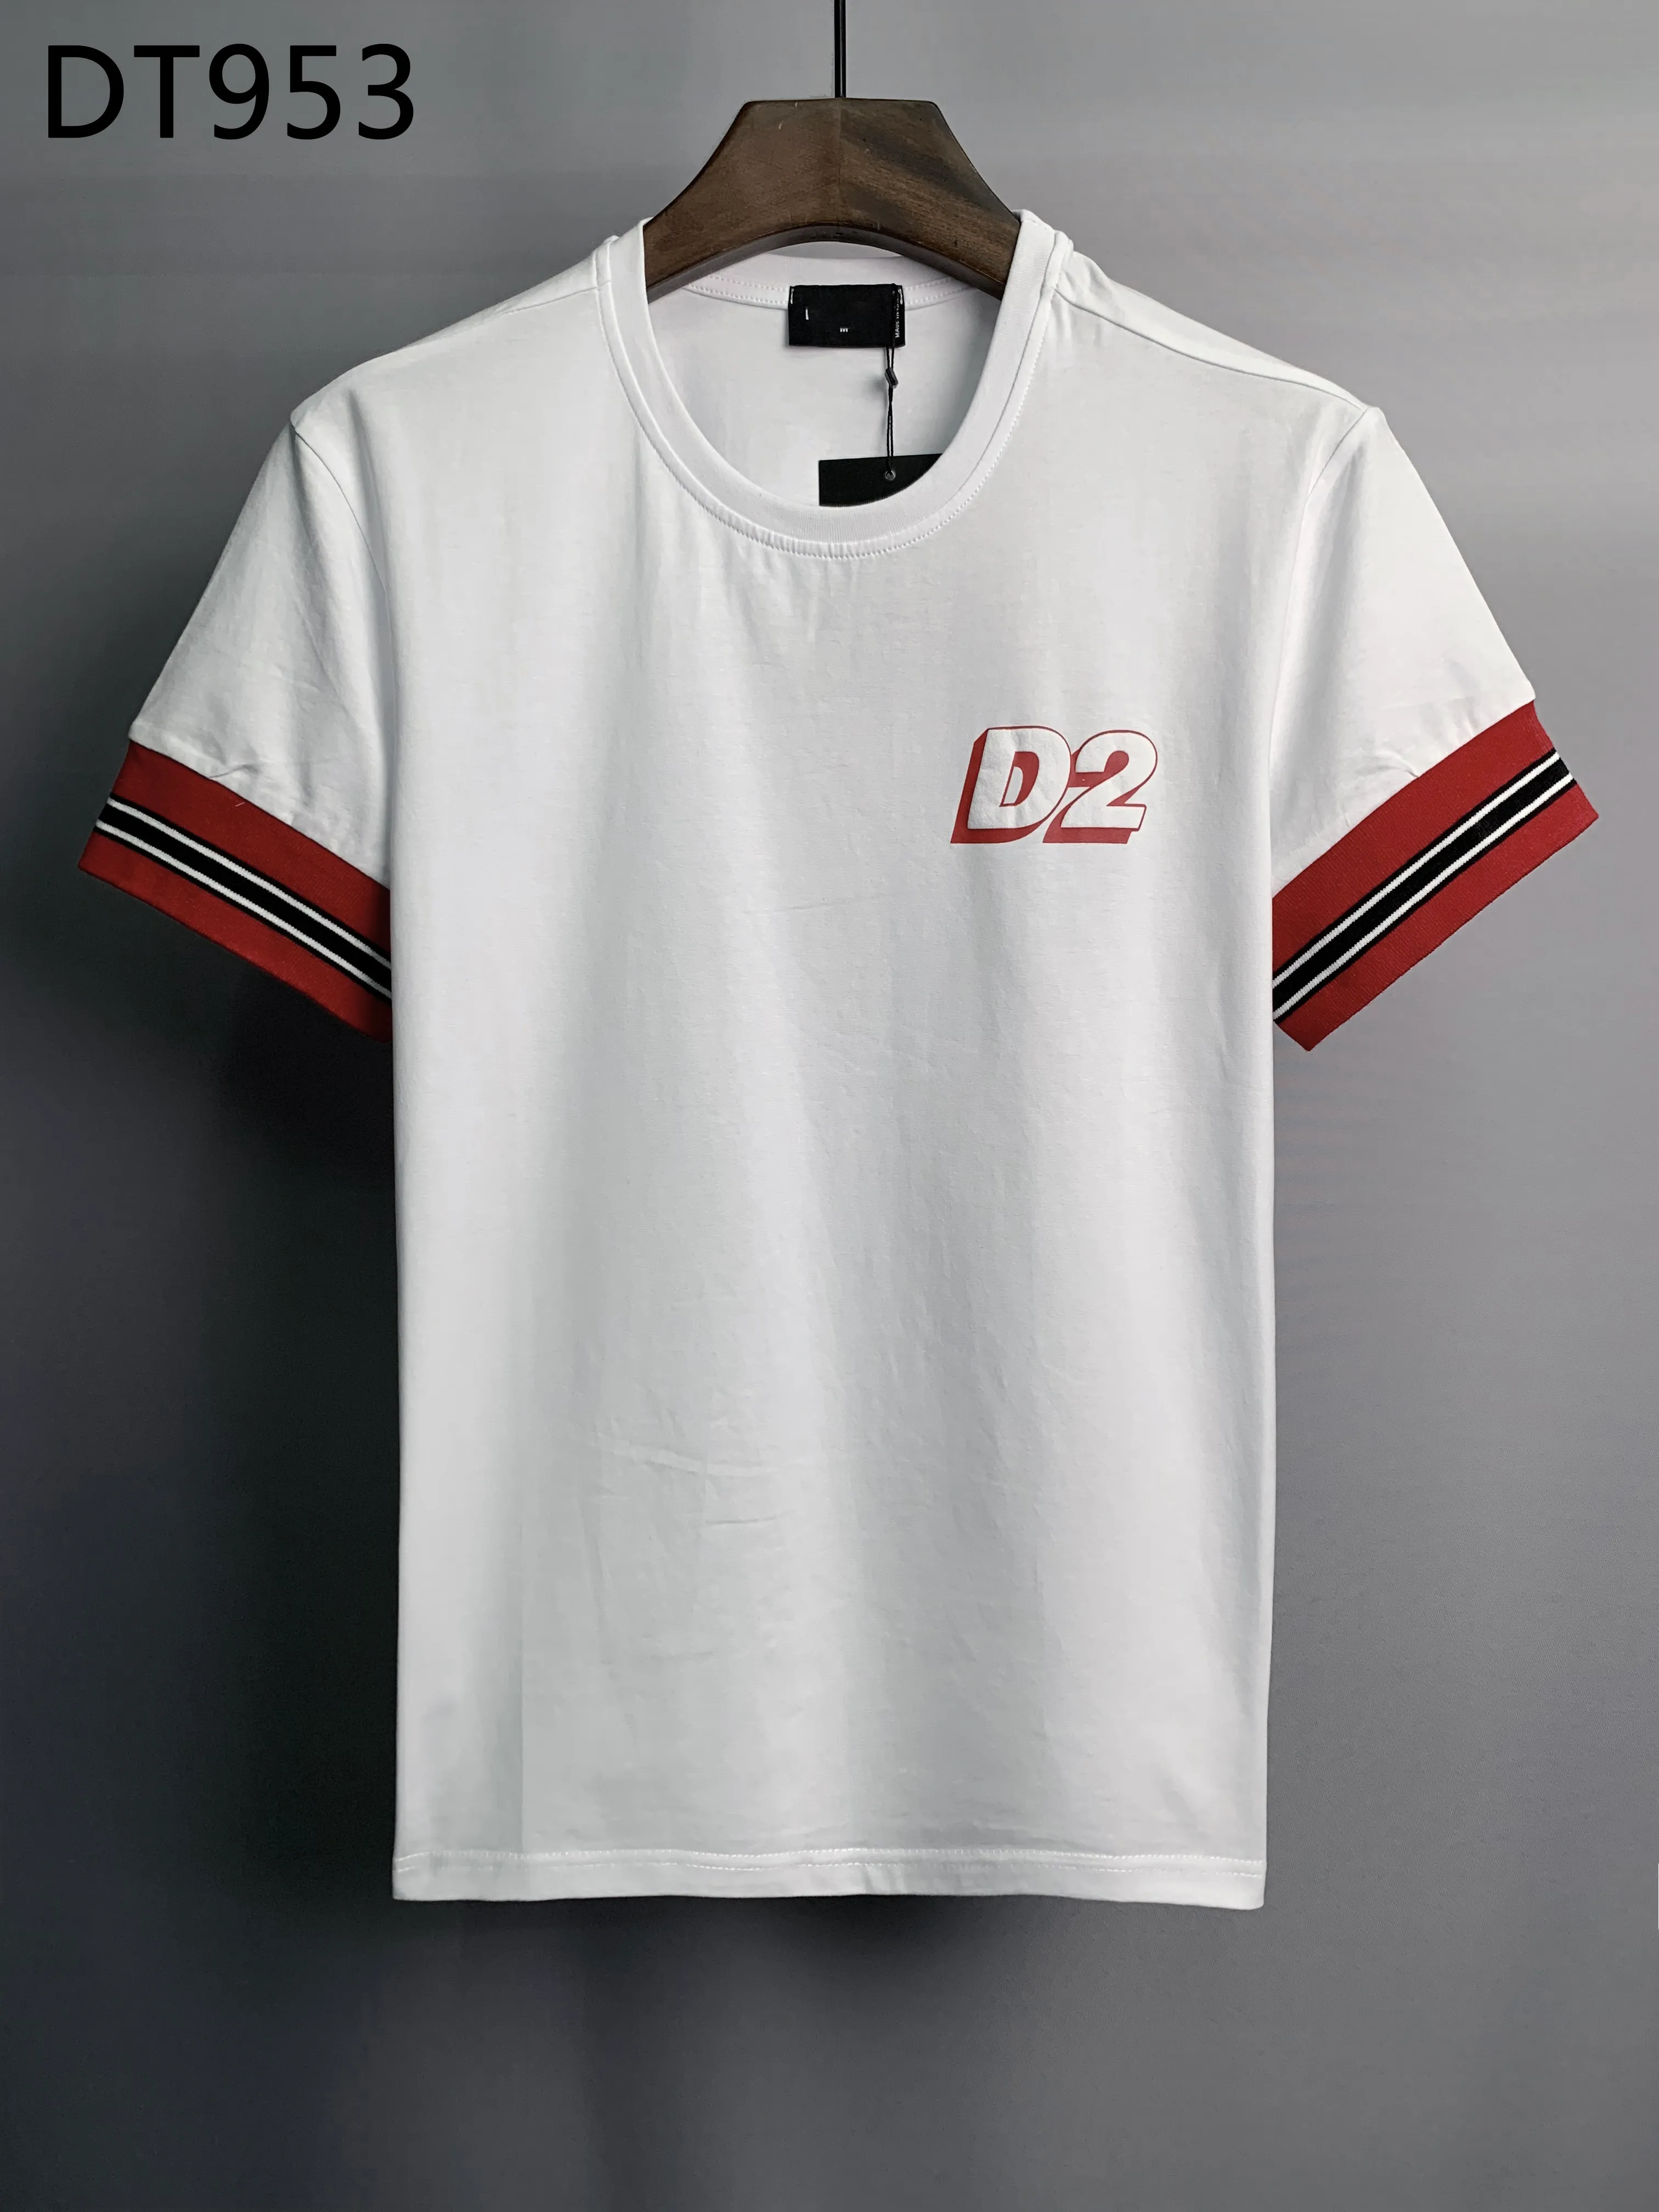 T-shirt D2 New Mens Designer Parigi moda Magliette T-shirt estiva Uomo Alta qualità 100% cotone Taglia asiatica M-XXXL DT9531